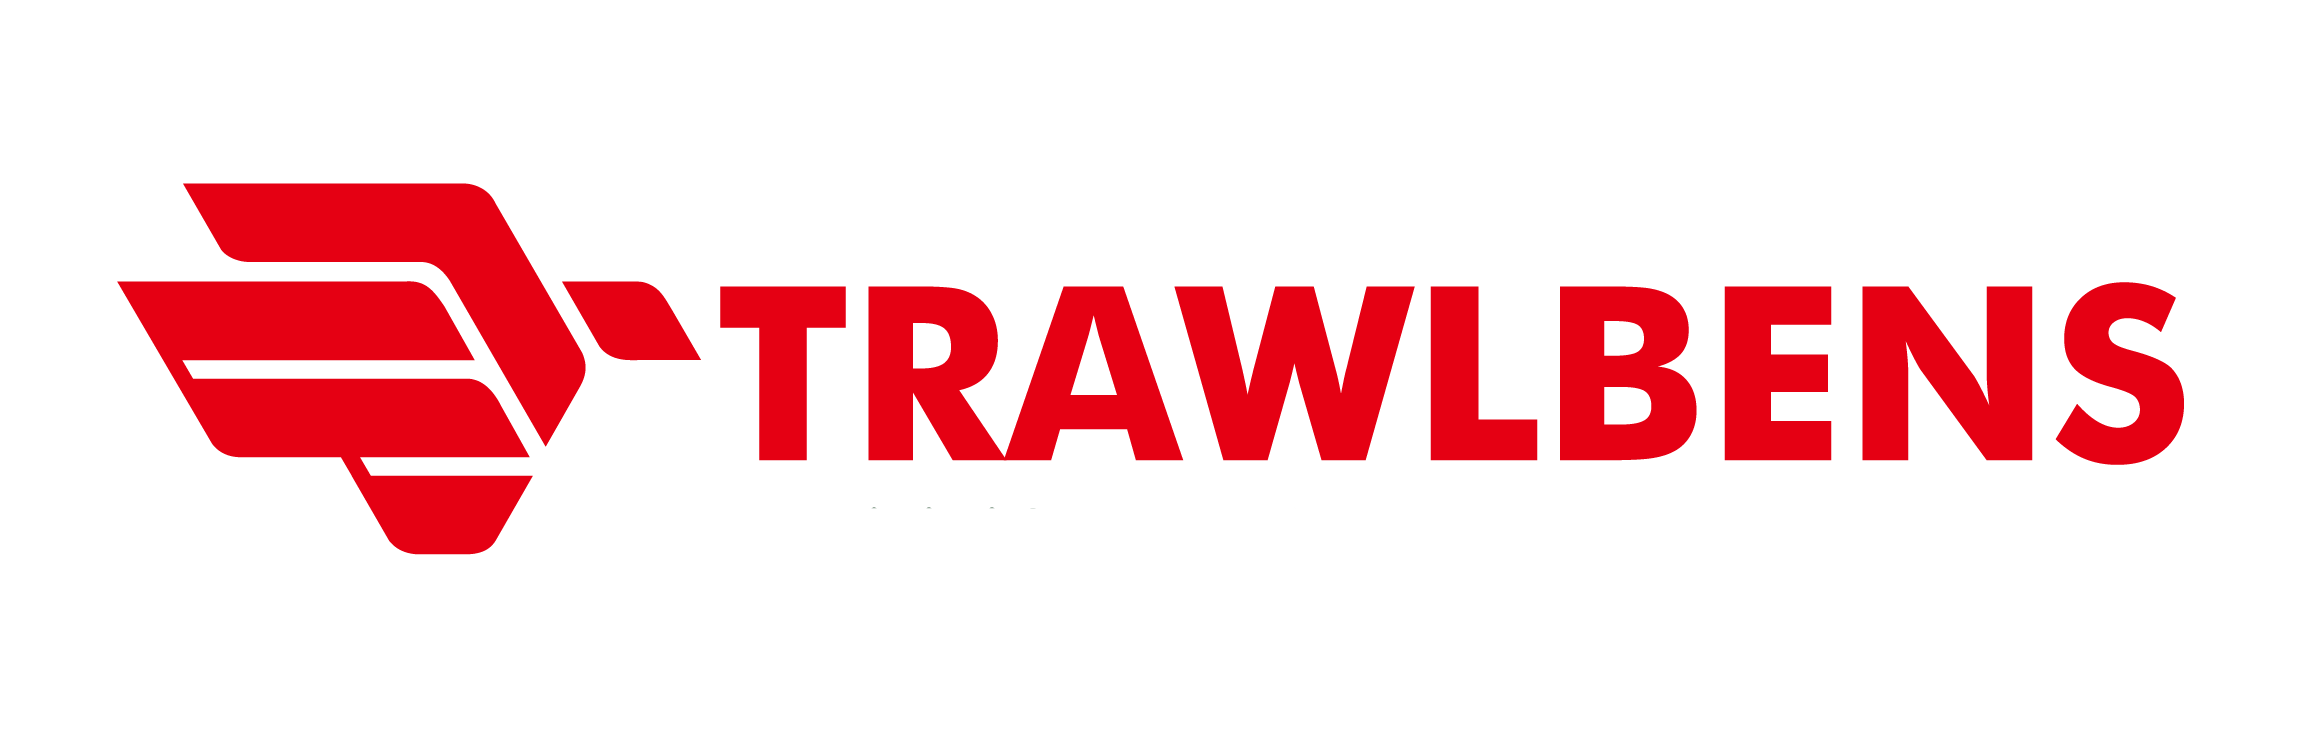 logo trawlbens